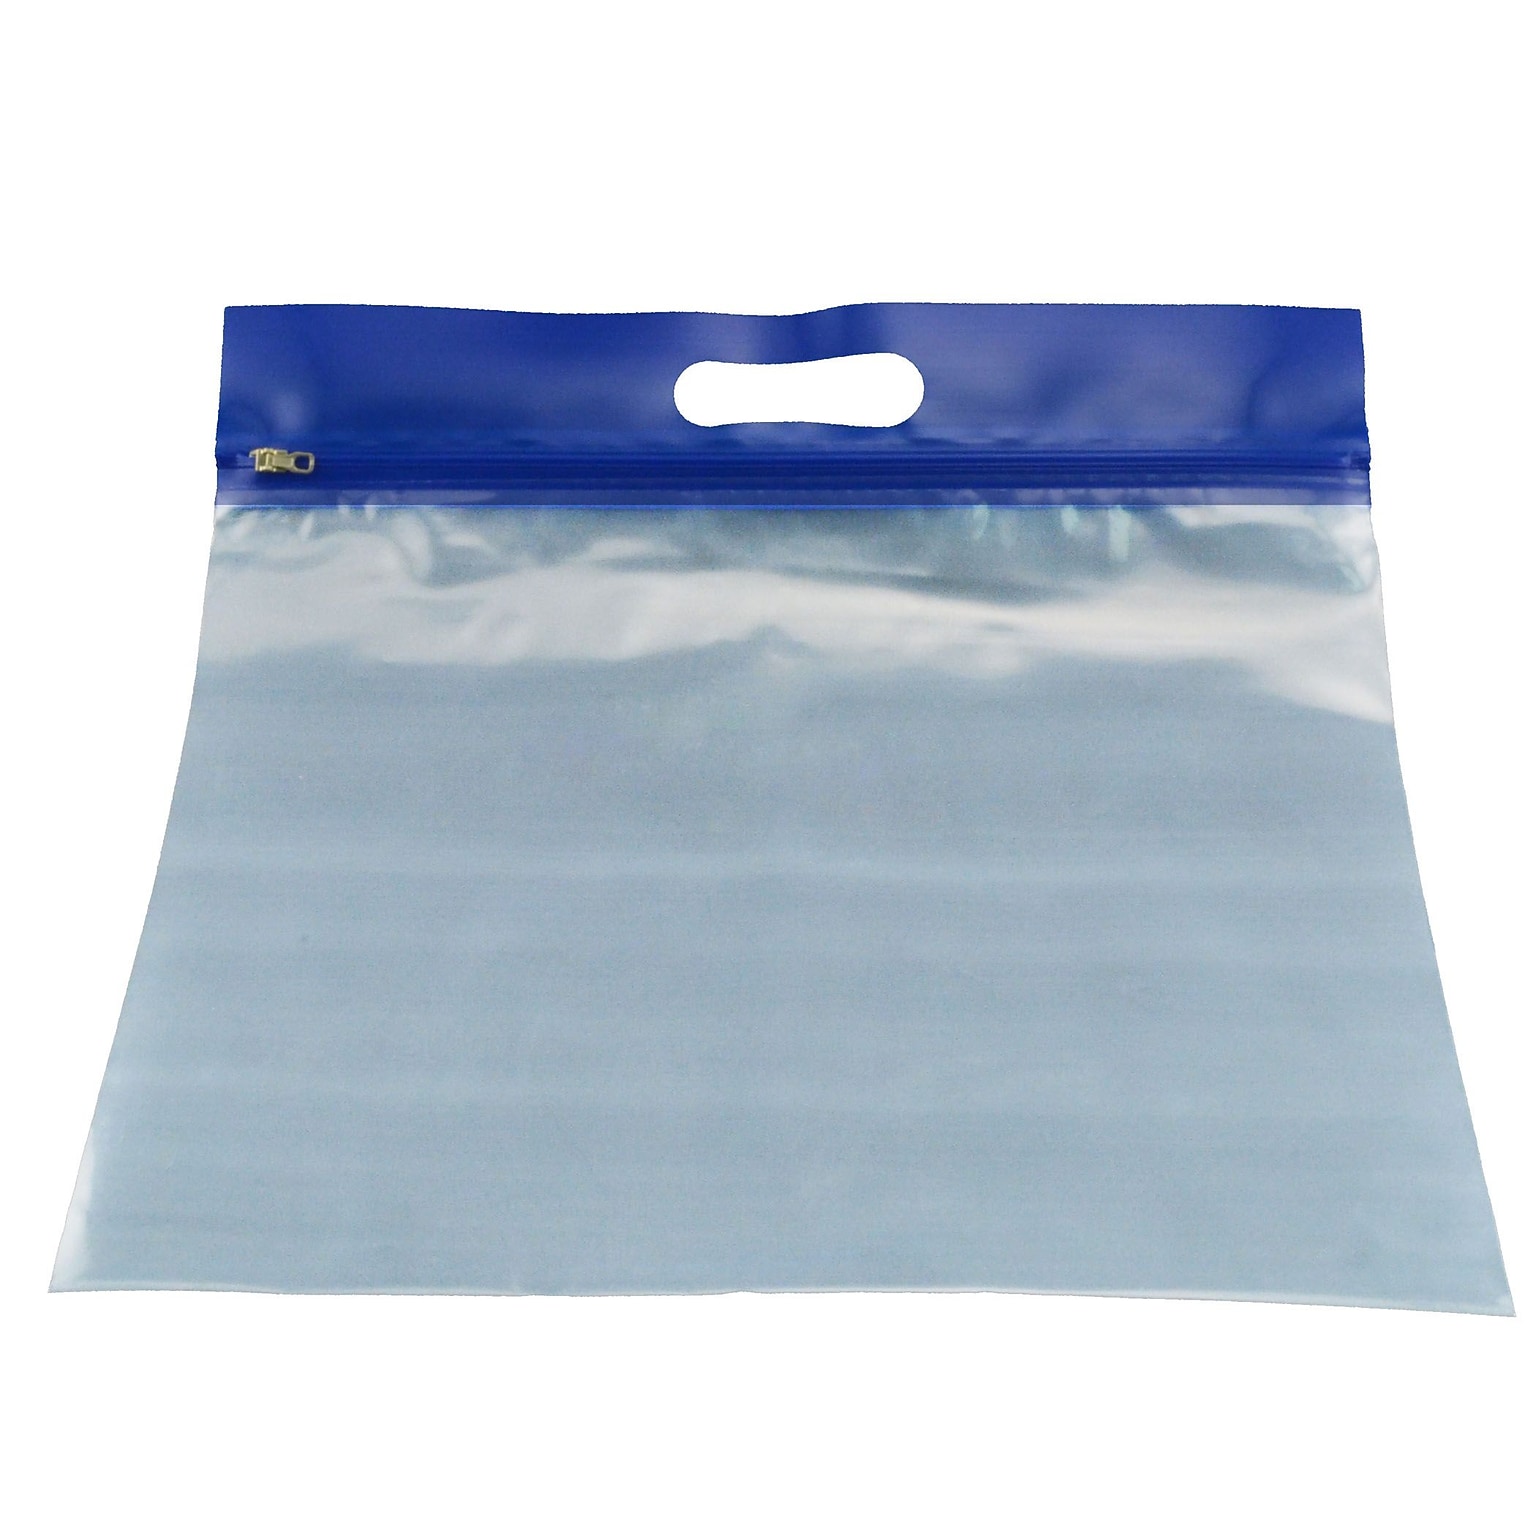 Bags of Bags ZIPAFILE 14H x 13W Polyethylene Storage Bags, Clear Bag - Blue Zip, 25/Pack (BOBZFH1413BU)